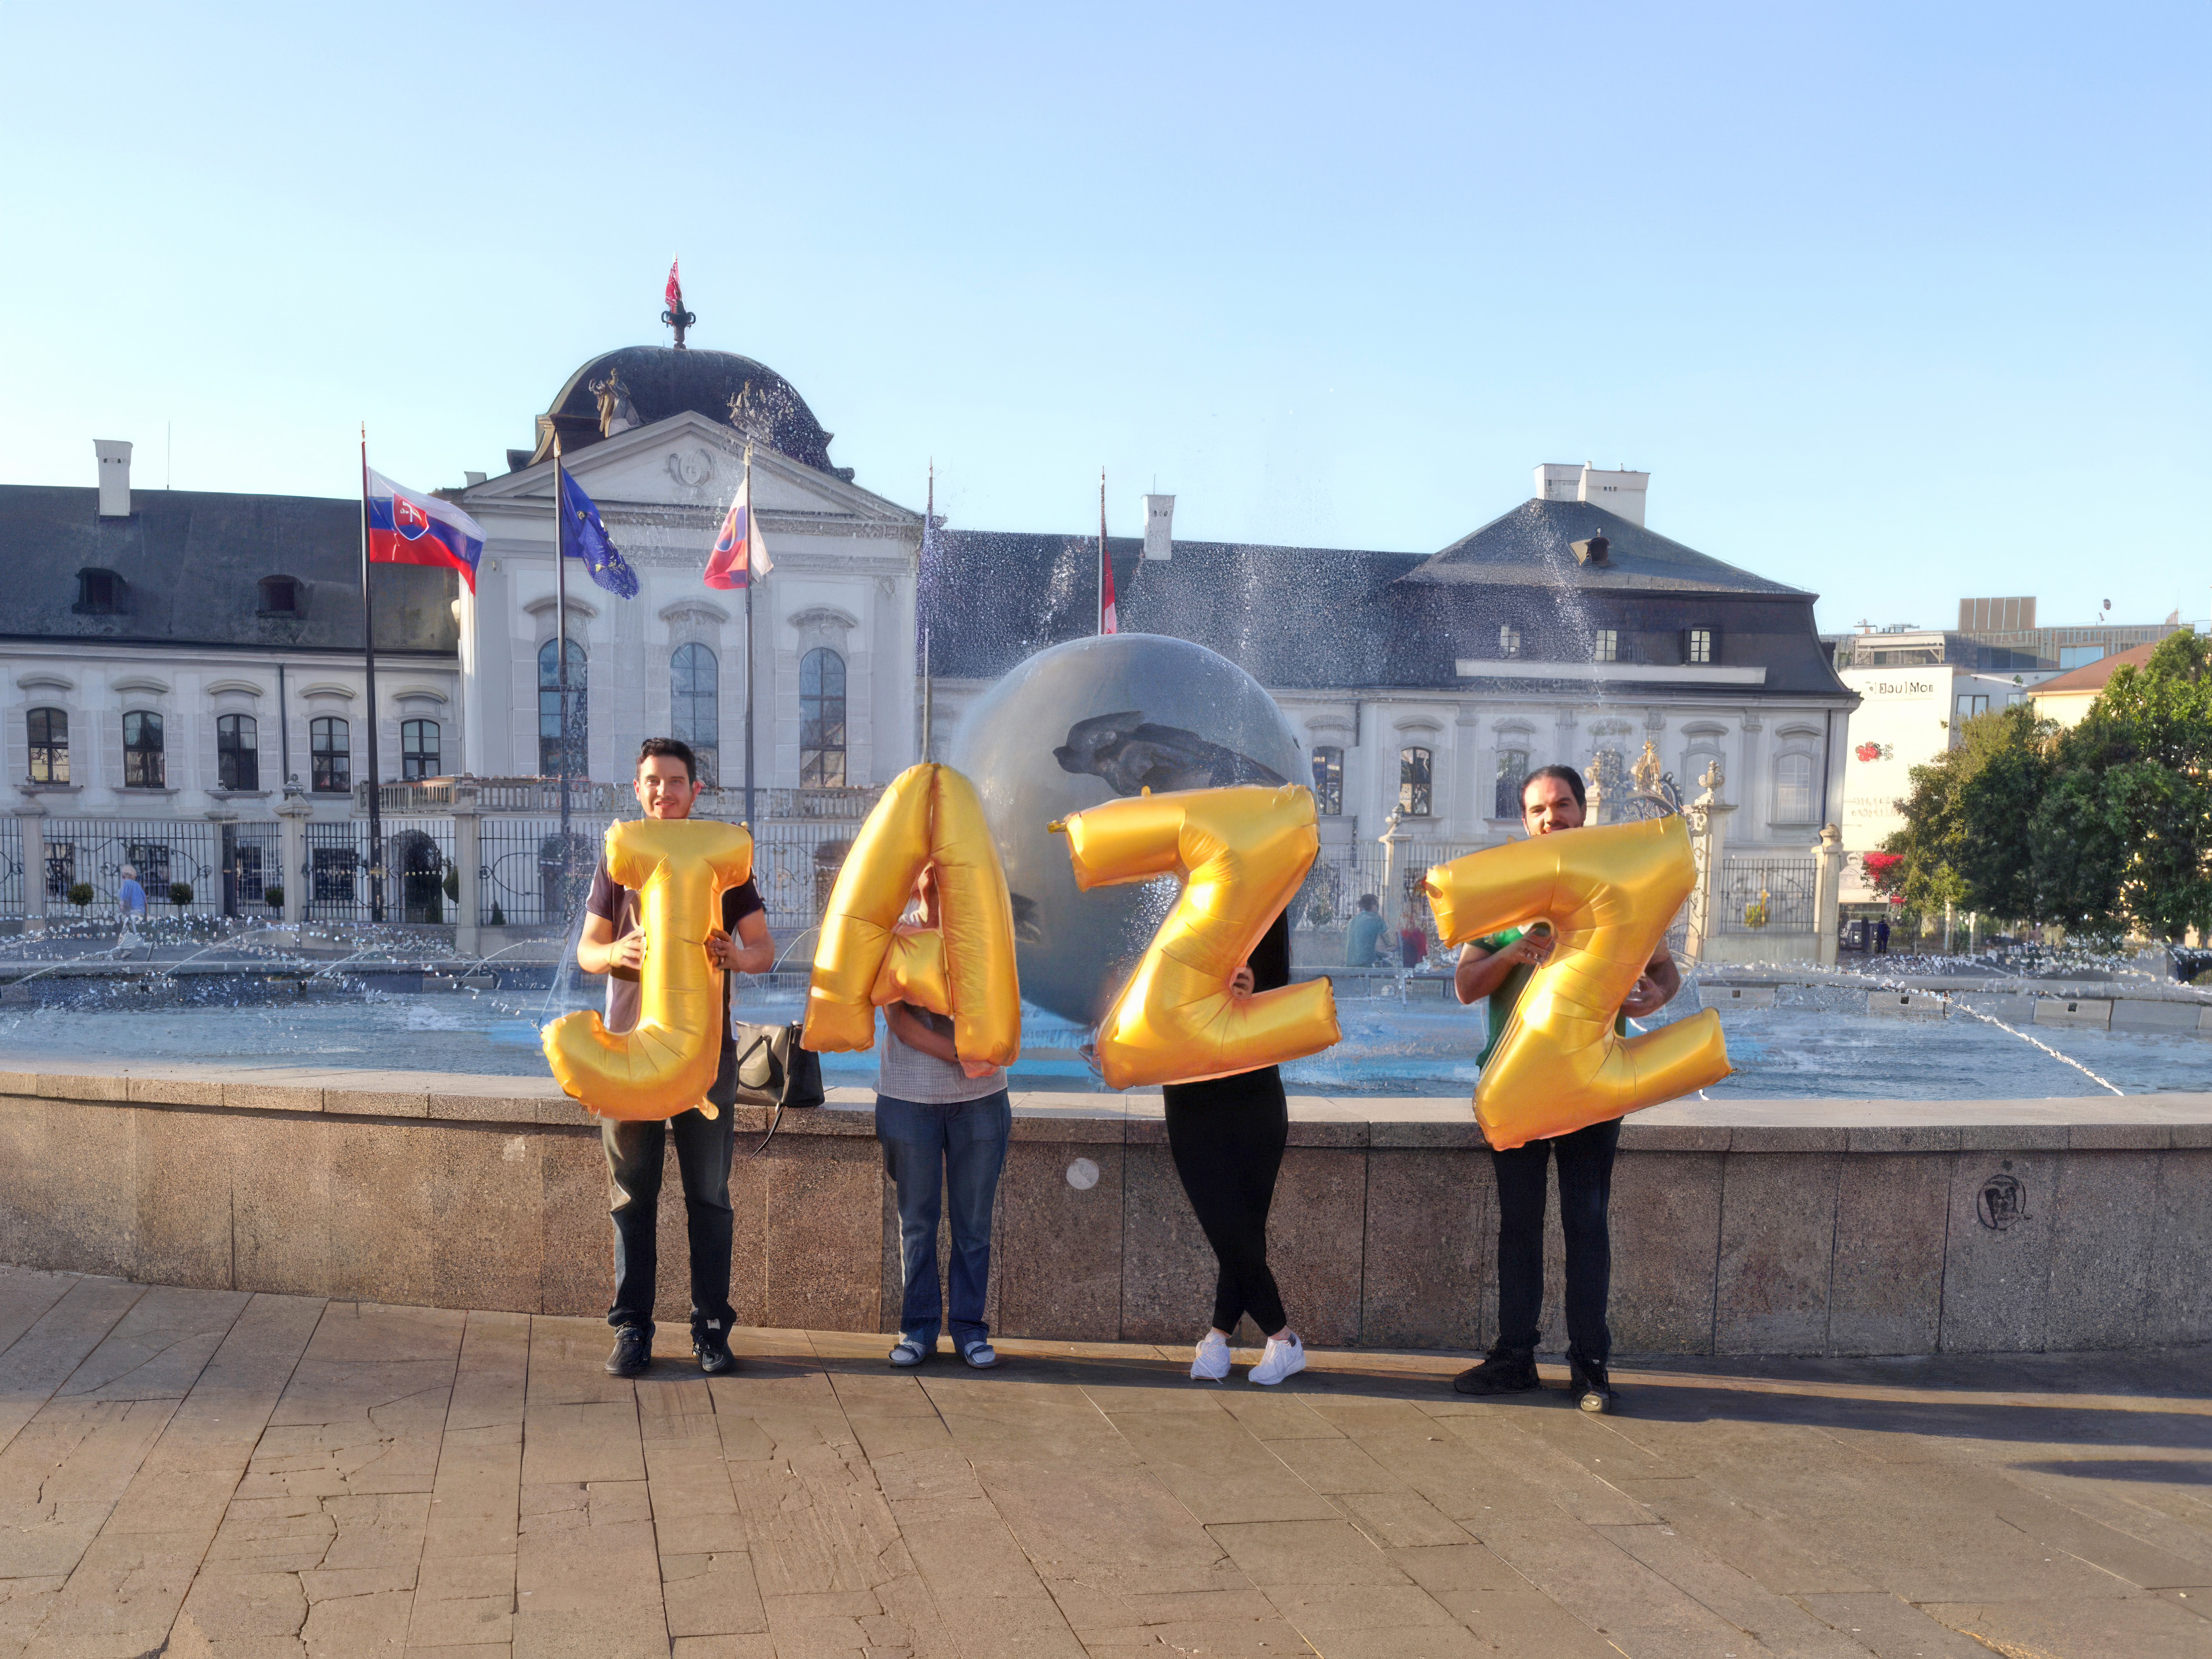 Slovakia, Bratislava, Grassalkovich Palace (Grasalkovičov palác) - Jazz, Silence was Golden, gold balloons